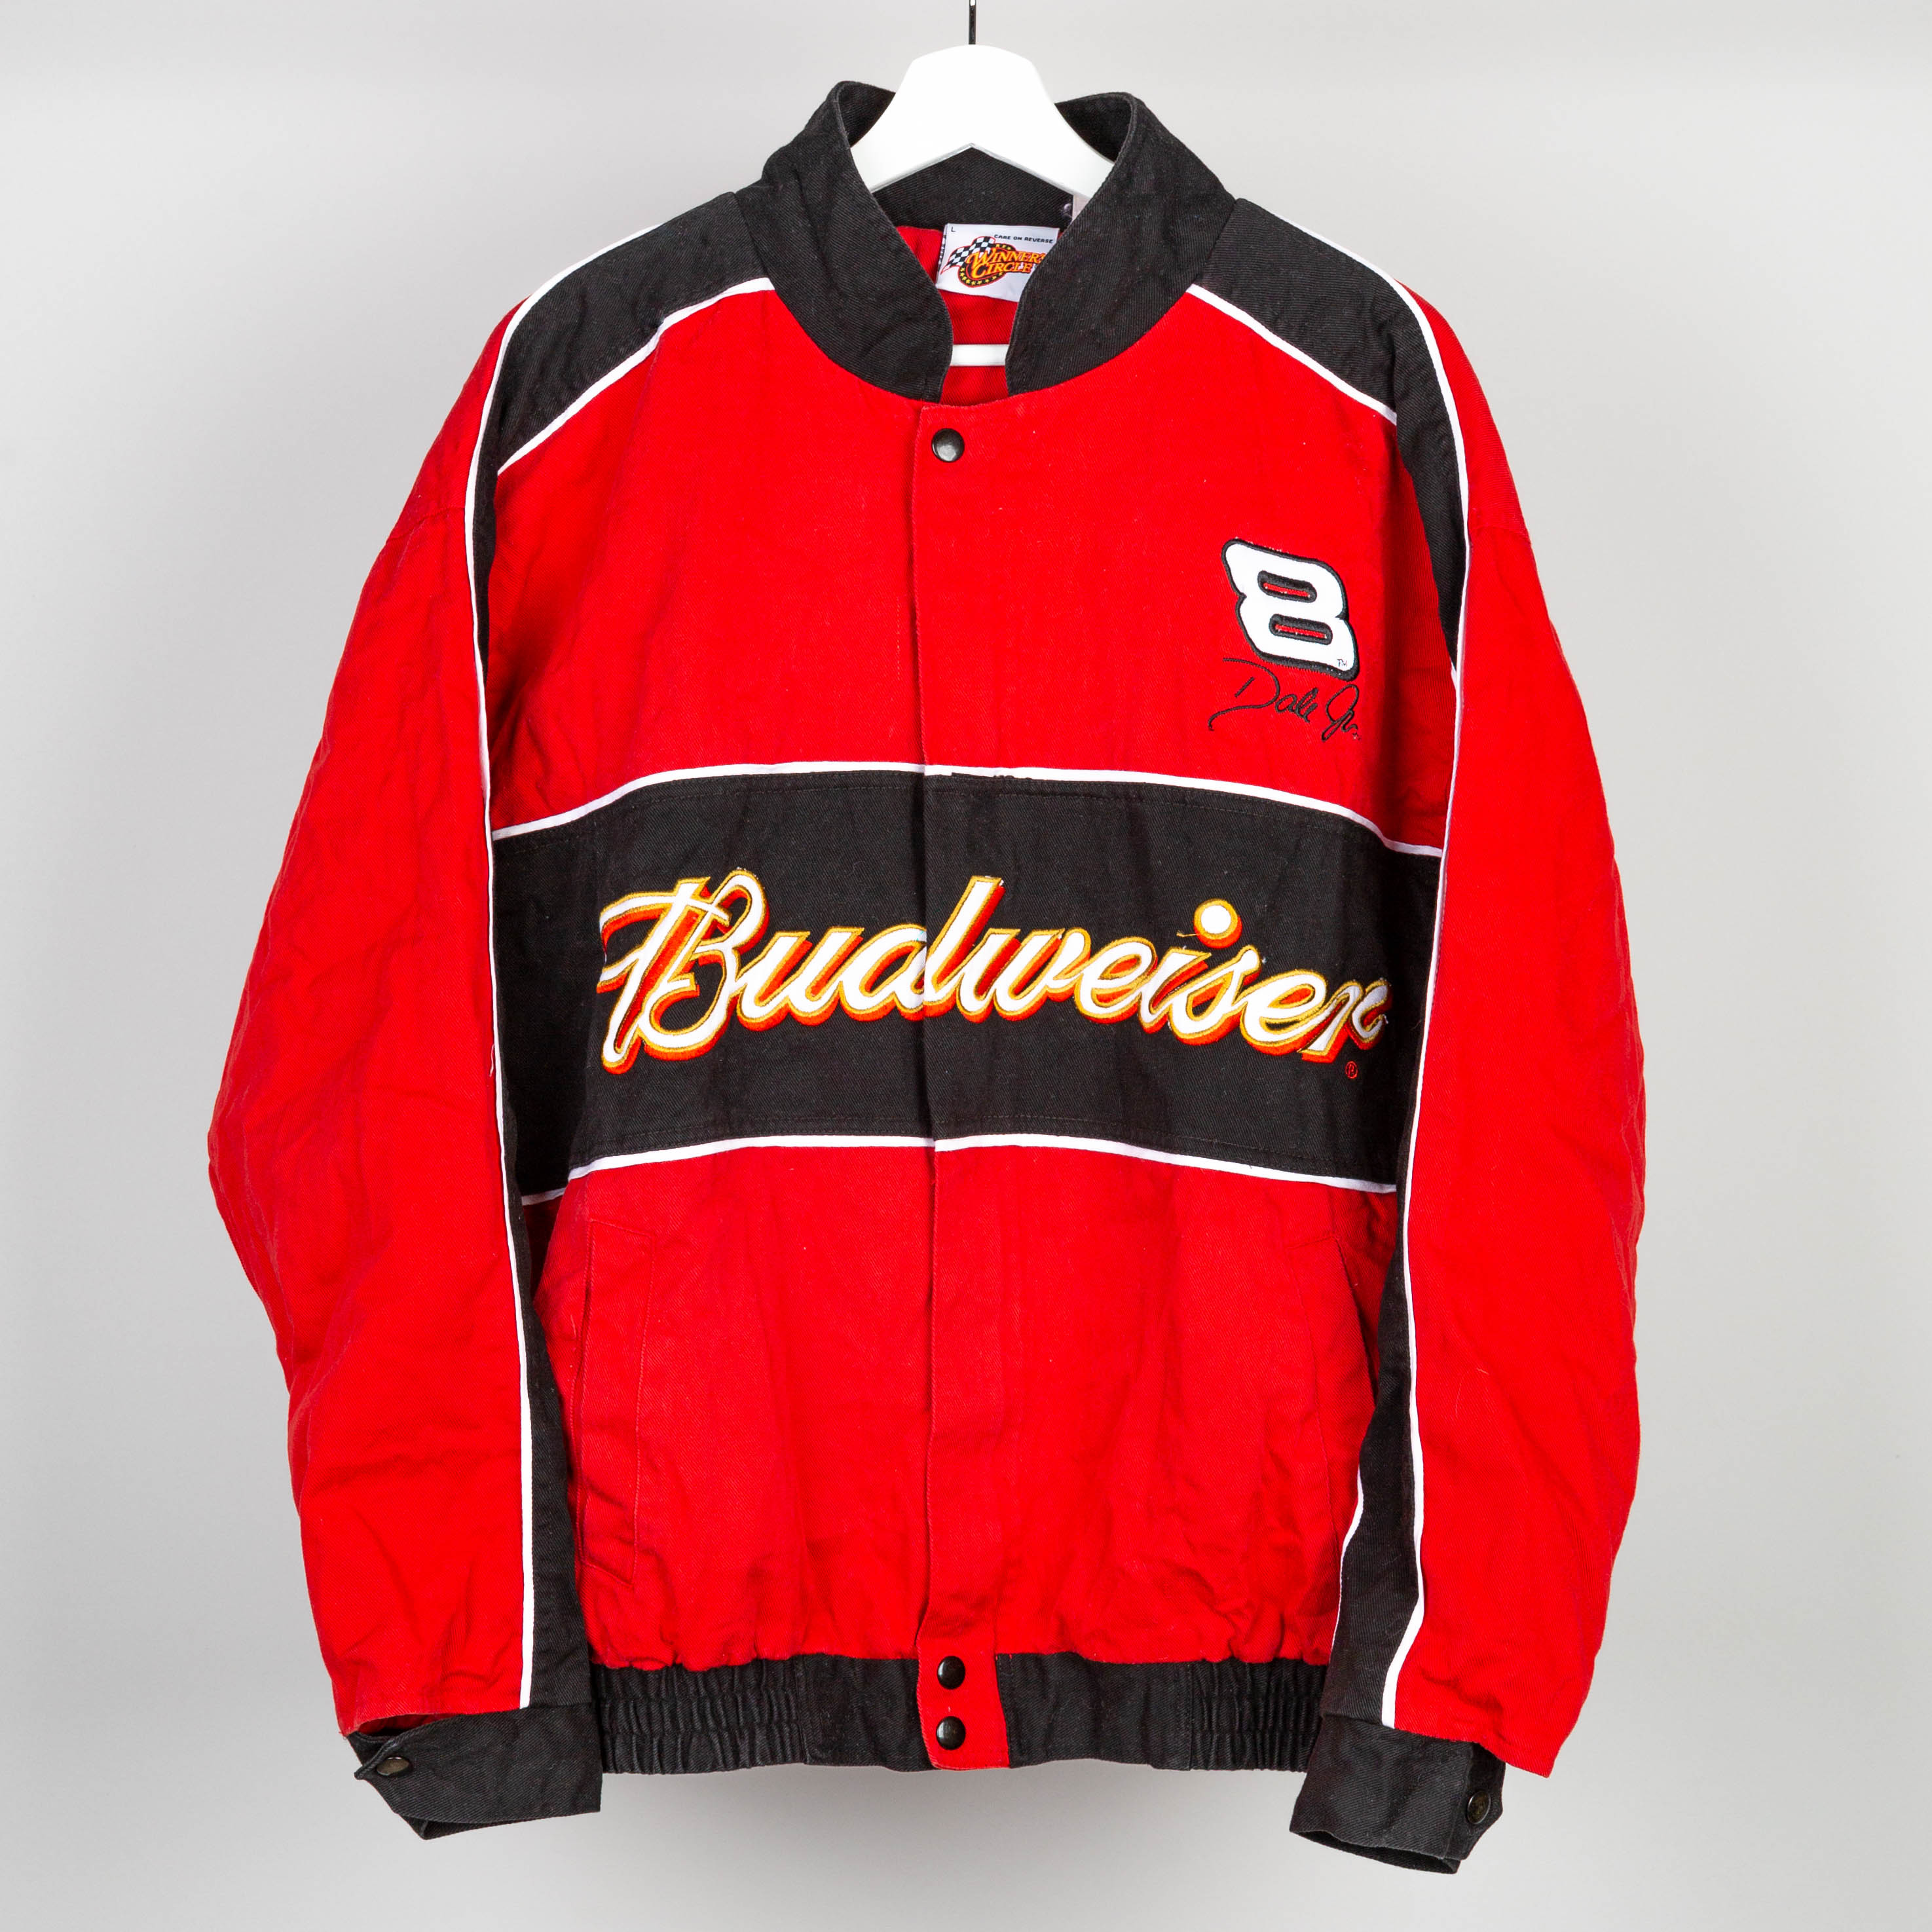 Dale JR Nascar Bud Racing Jacket Size L